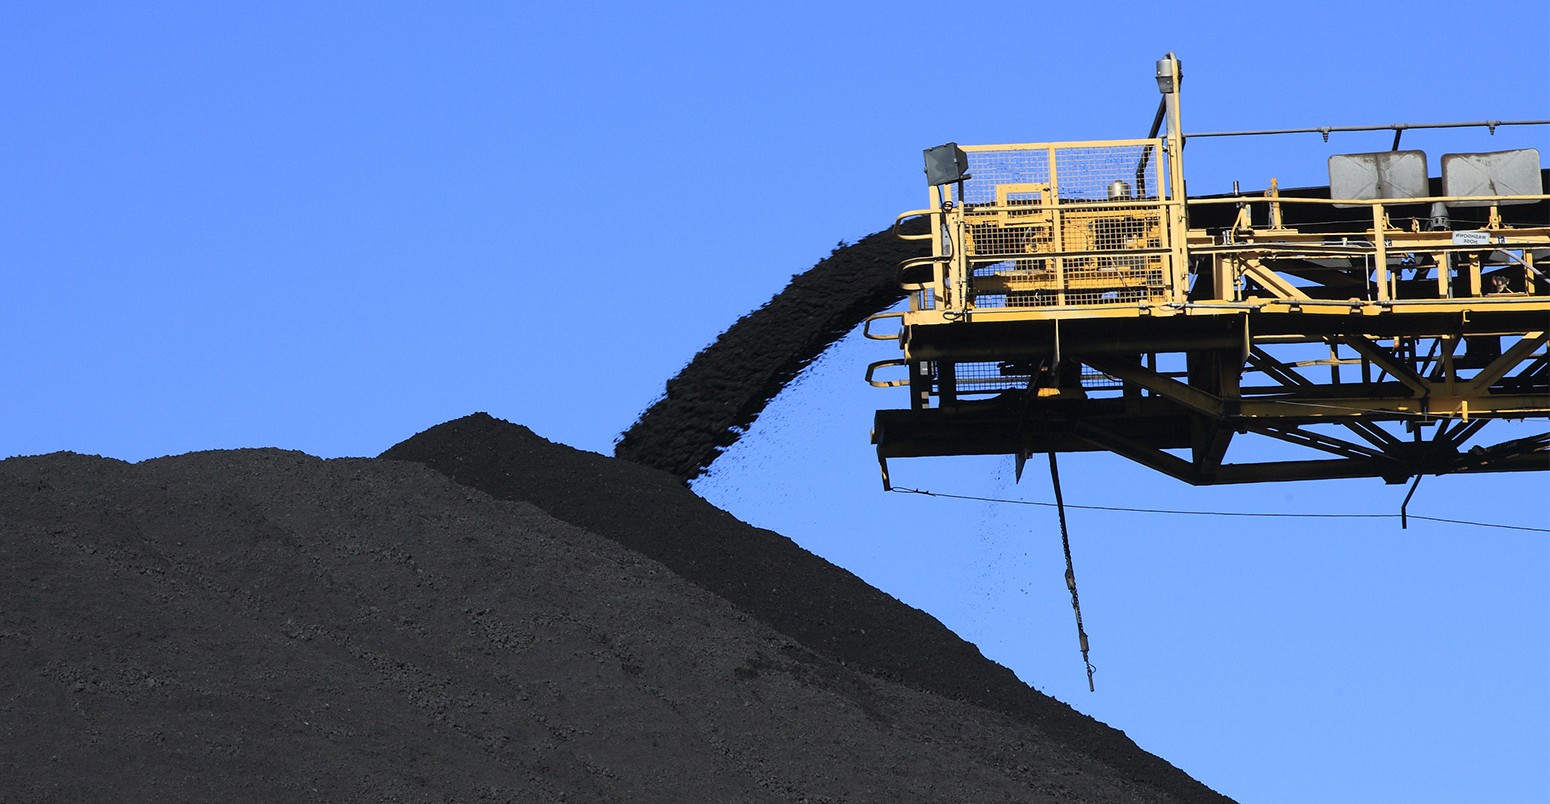 Conveyor belt empties coal into a pile